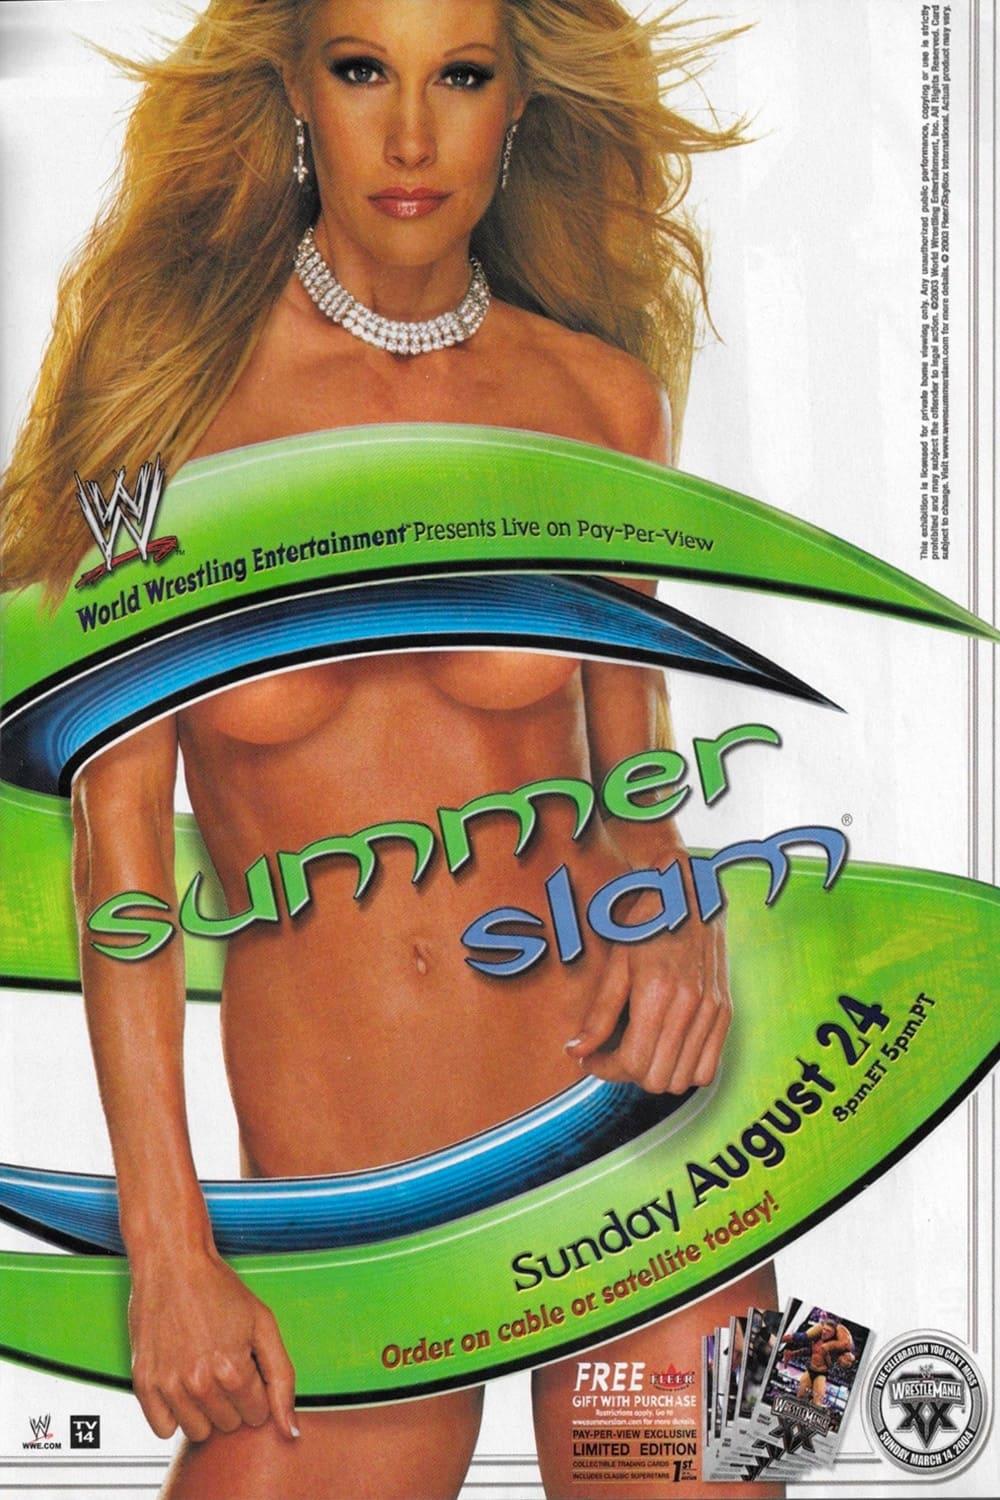 WWE SummerSlam 2003 poster